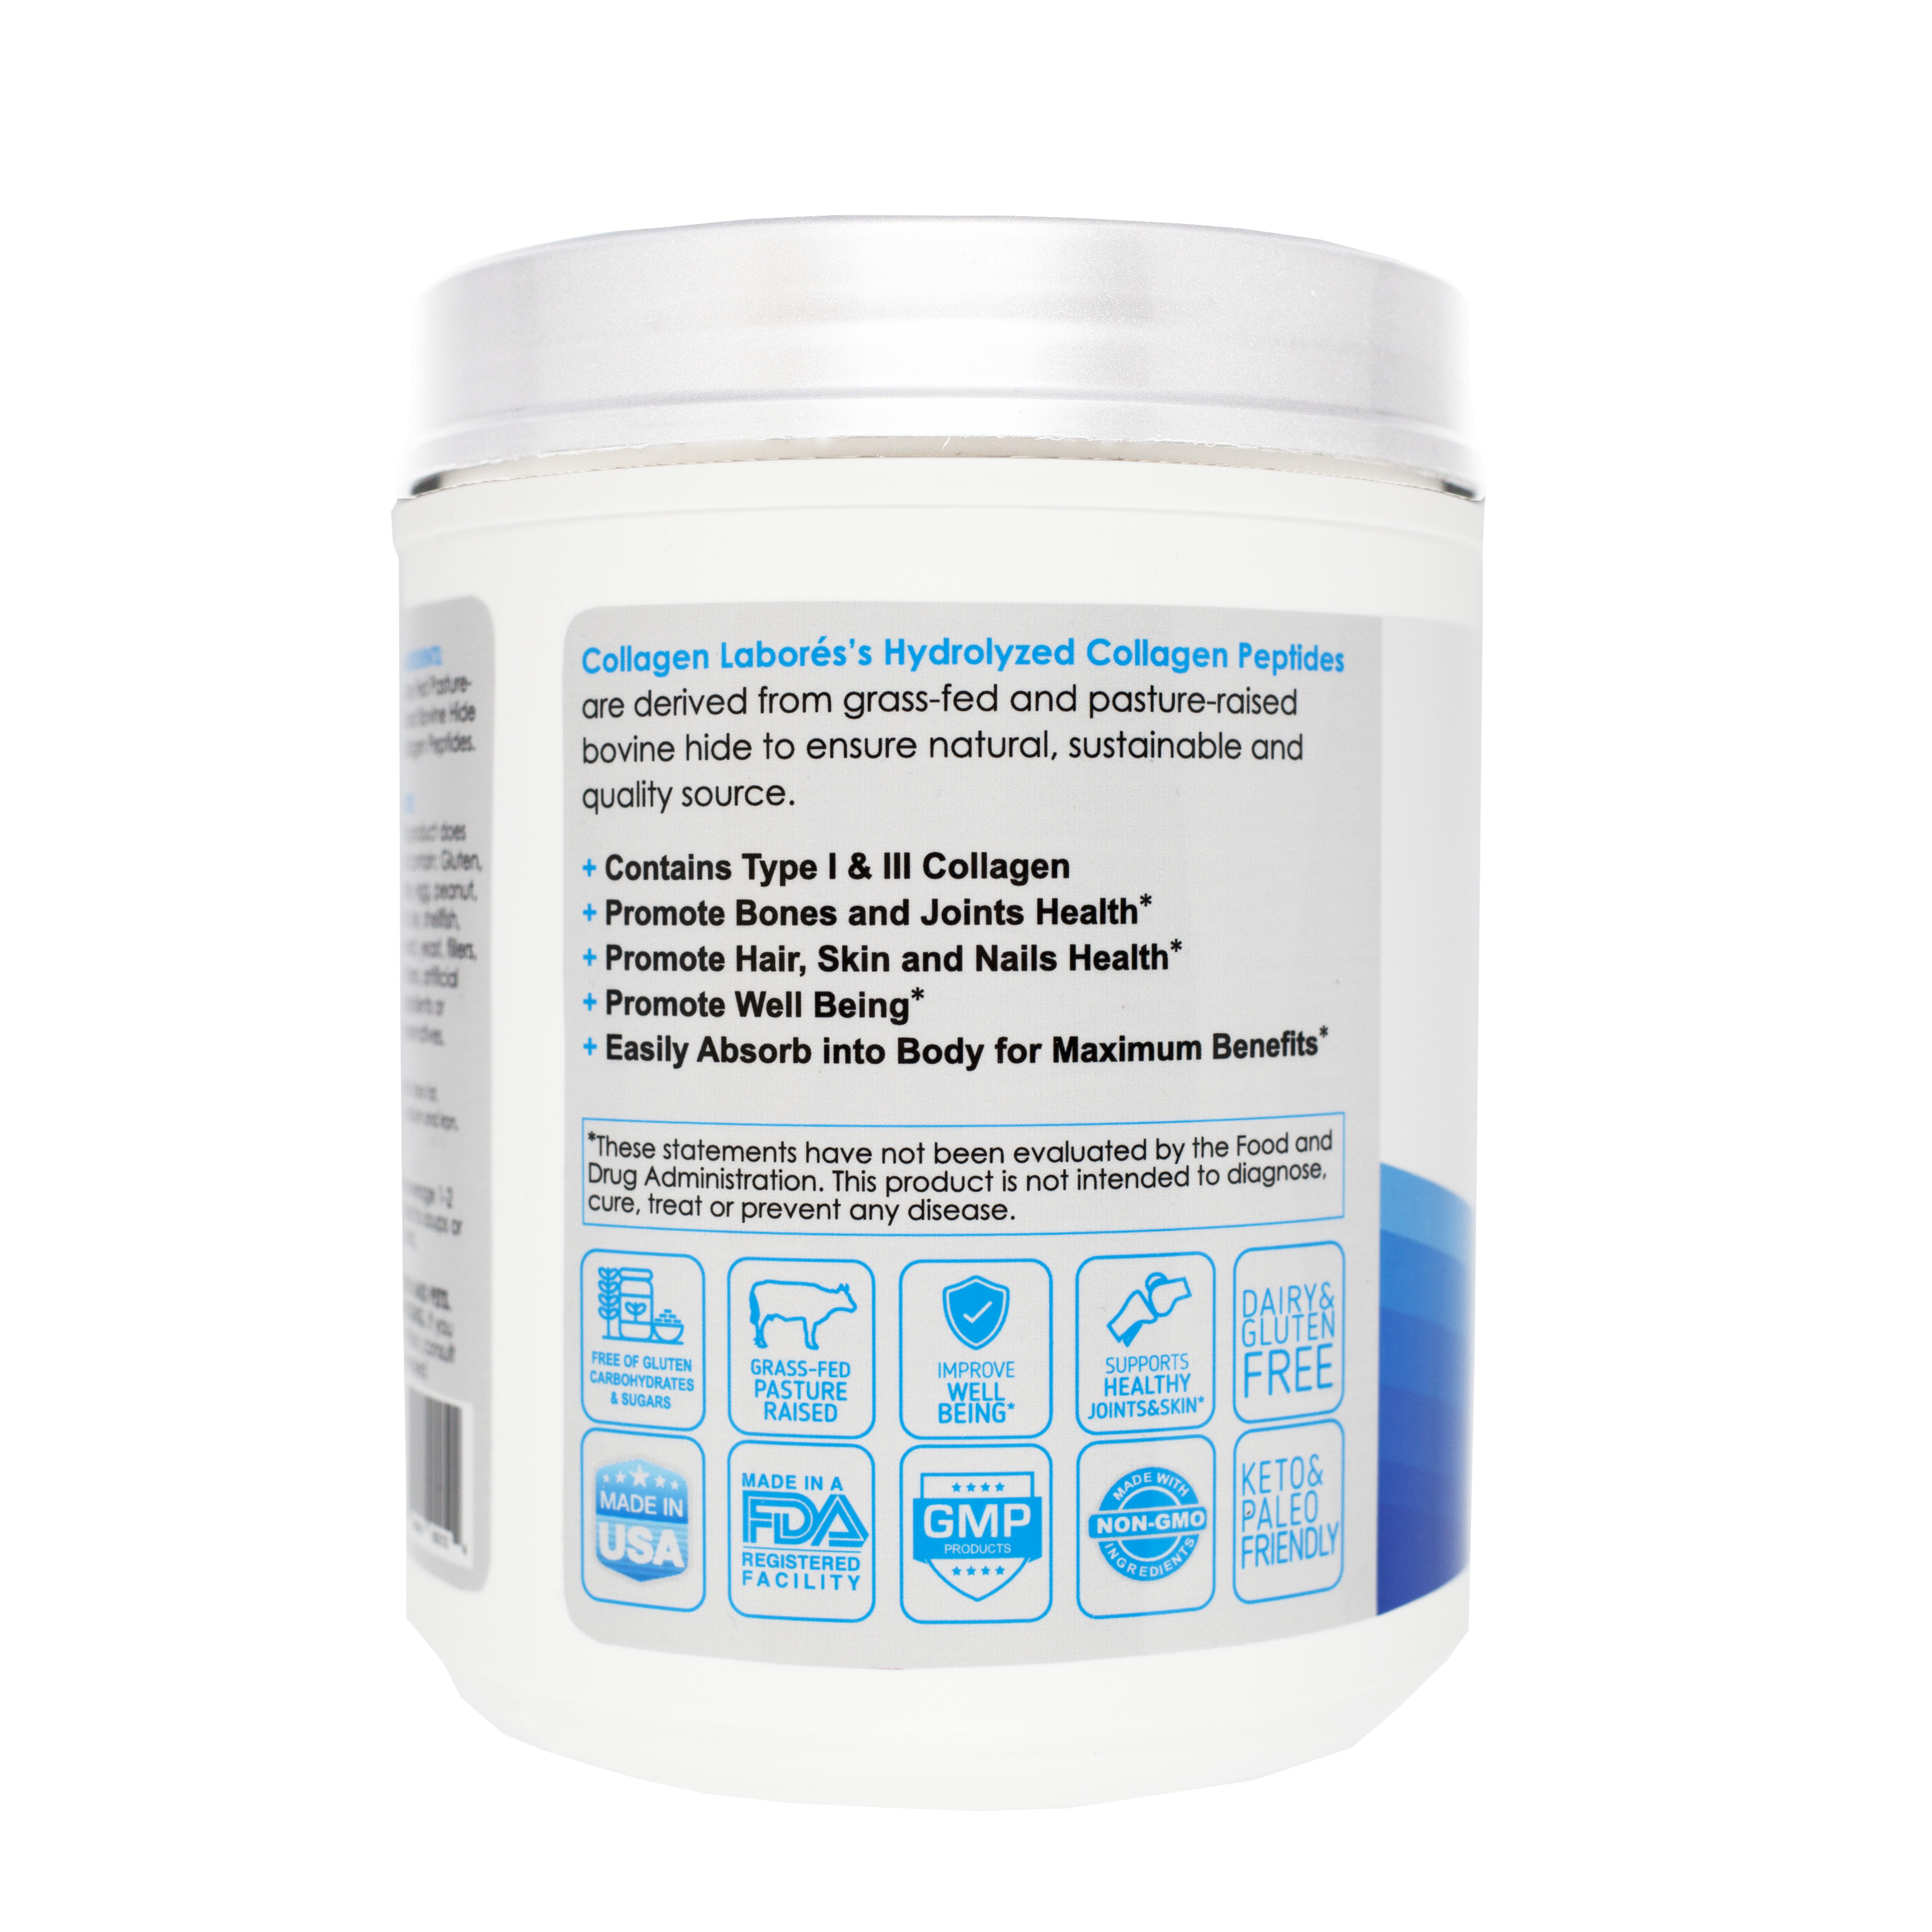 Thực Phẩm Bảo Vệ Sức Khỏe: Collagen laborés Hydrolyzed Collagen Peptides (Powder)